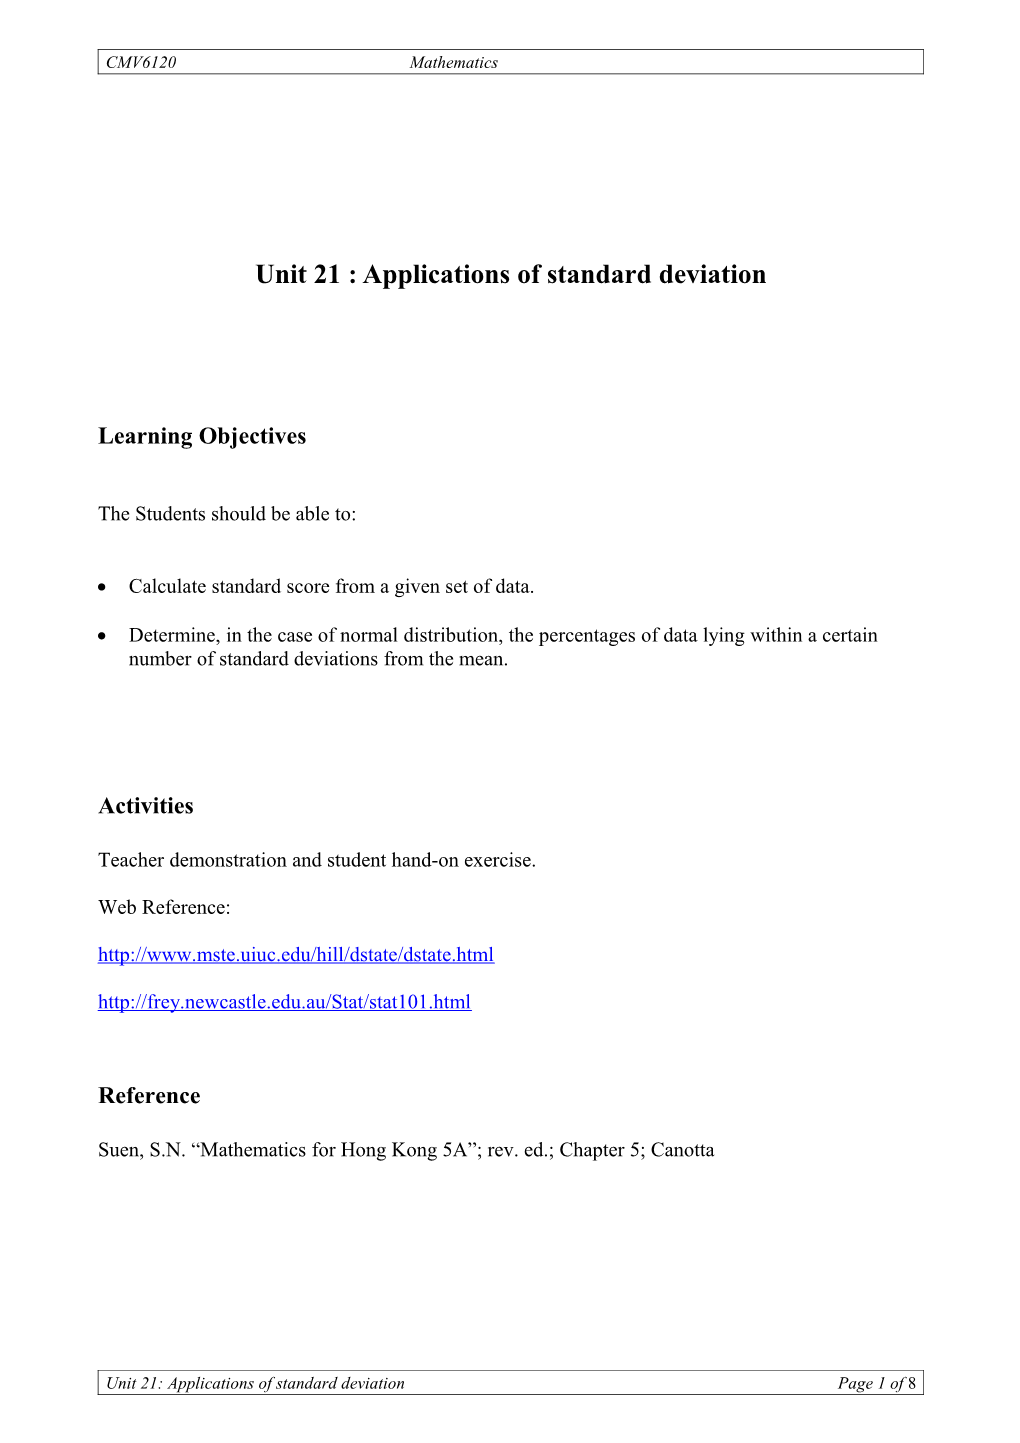 Unit 24 : Applications of Standard Deviation